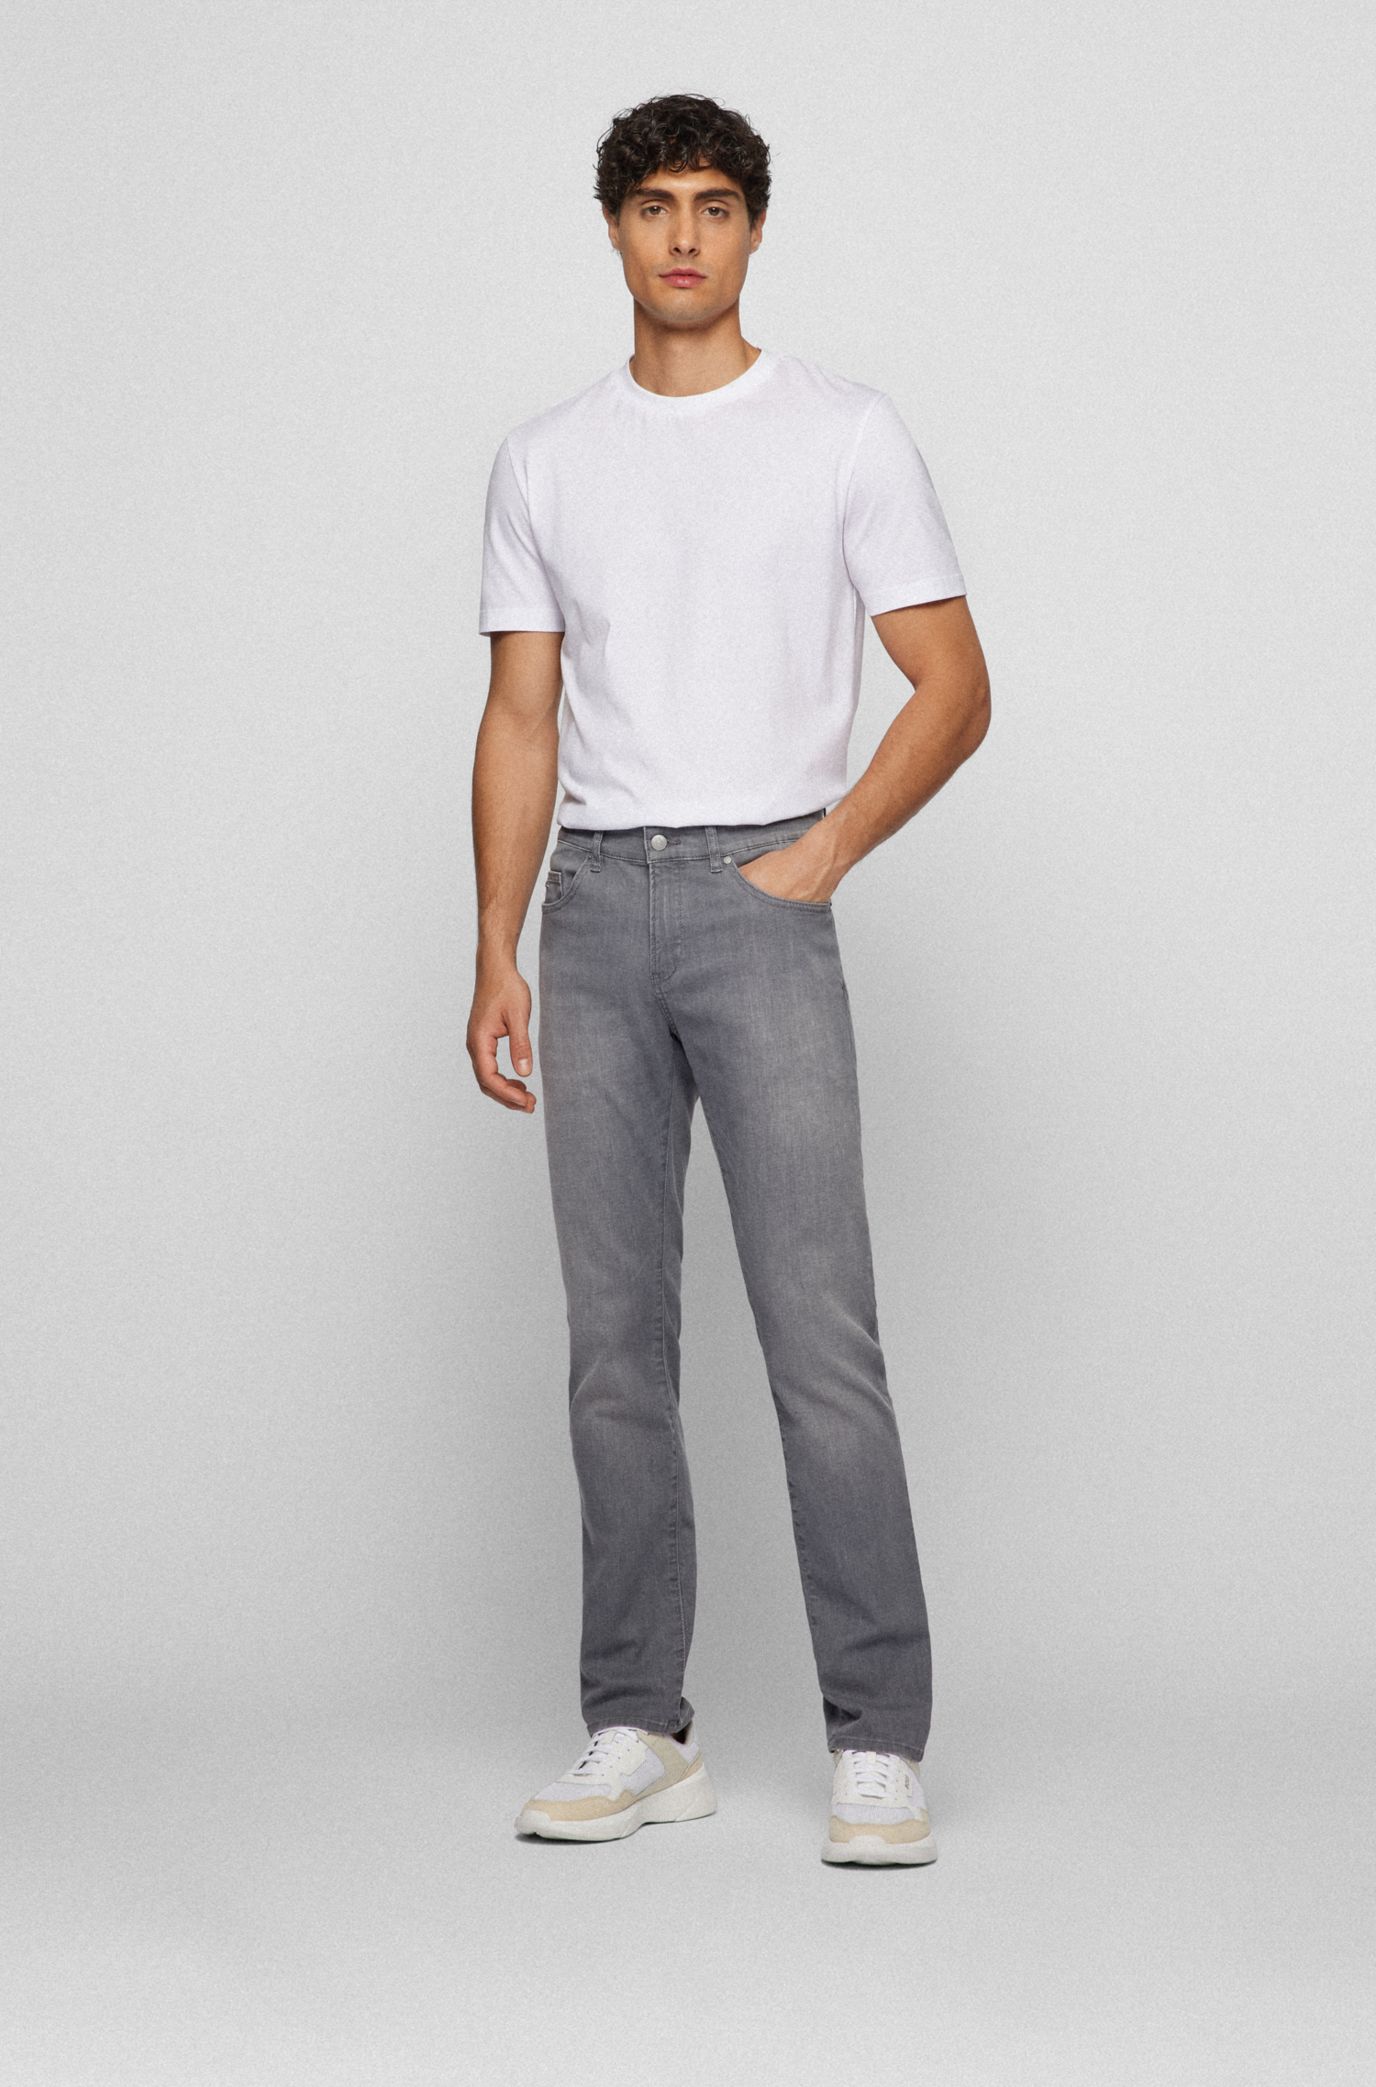 BOSS - Slim-fit jeans denim lightweight gray in